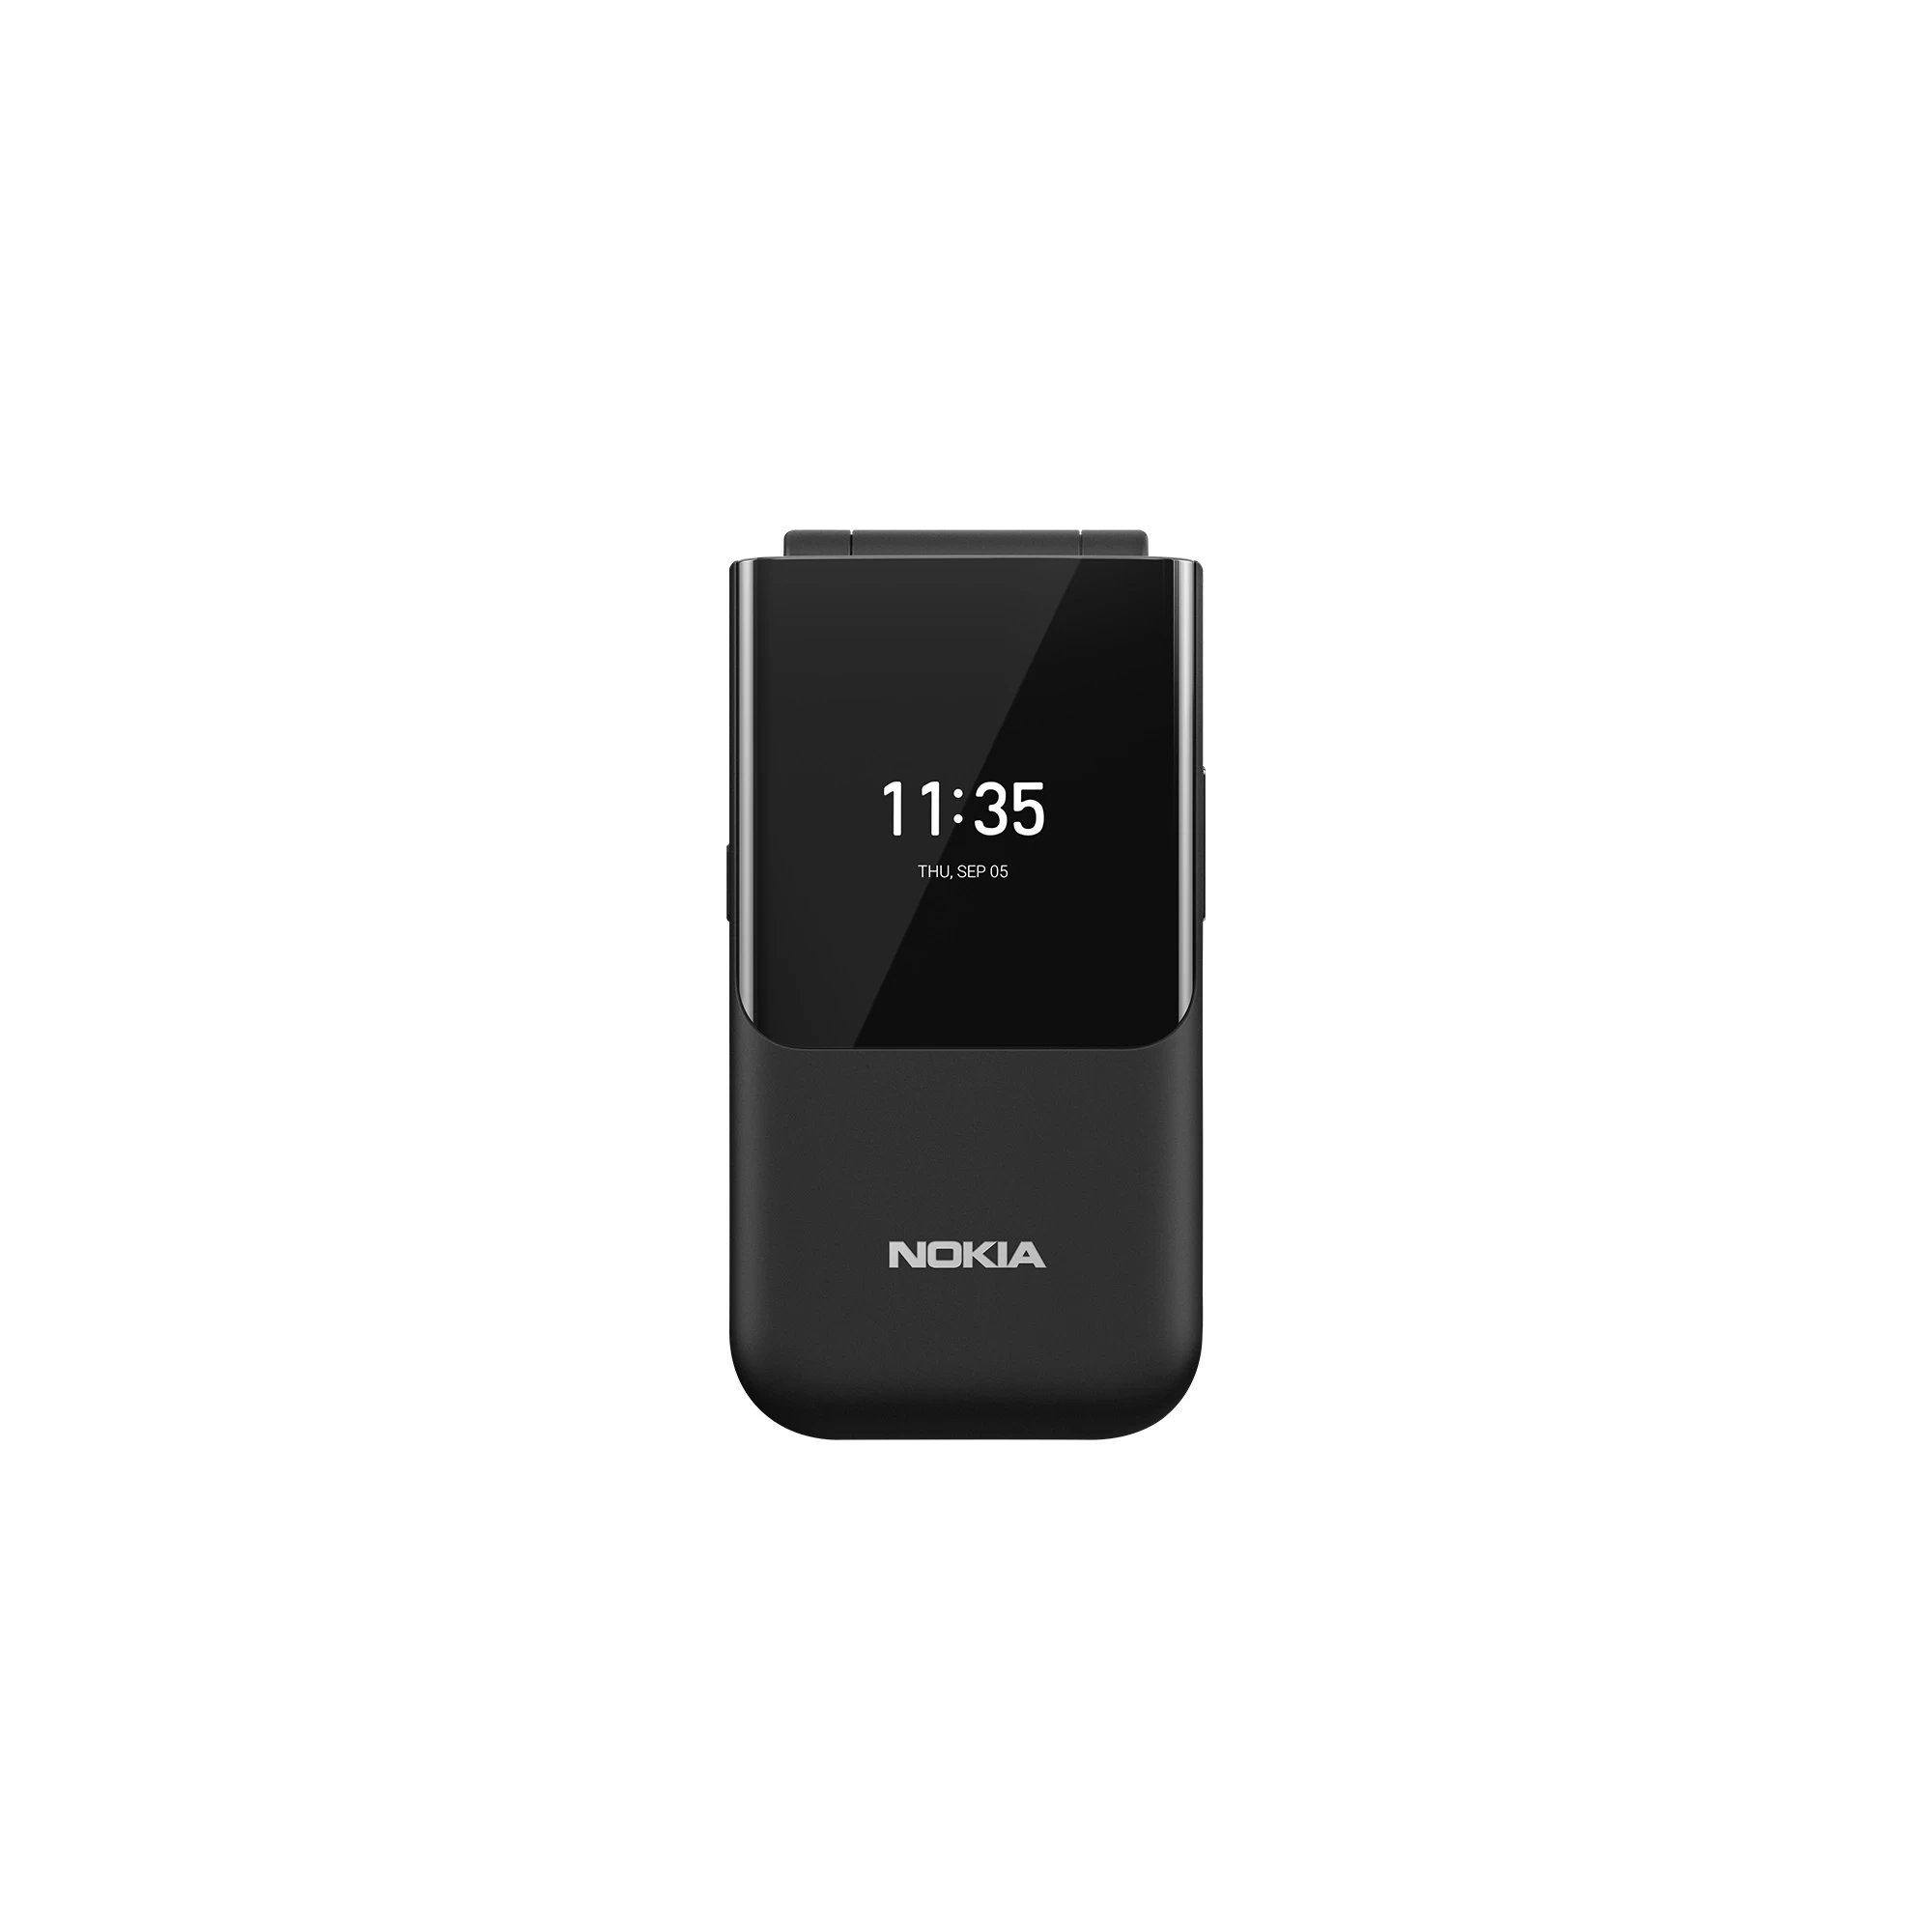 Nokia 2720 Flip 4 | lazada | Nokia 2720 Flip โทรศัพท์ฝาพับสุดคลาสสิคที่มาพร้อมการเชื่อมต่อแบบ 4G ในราคา 2,790 บาท